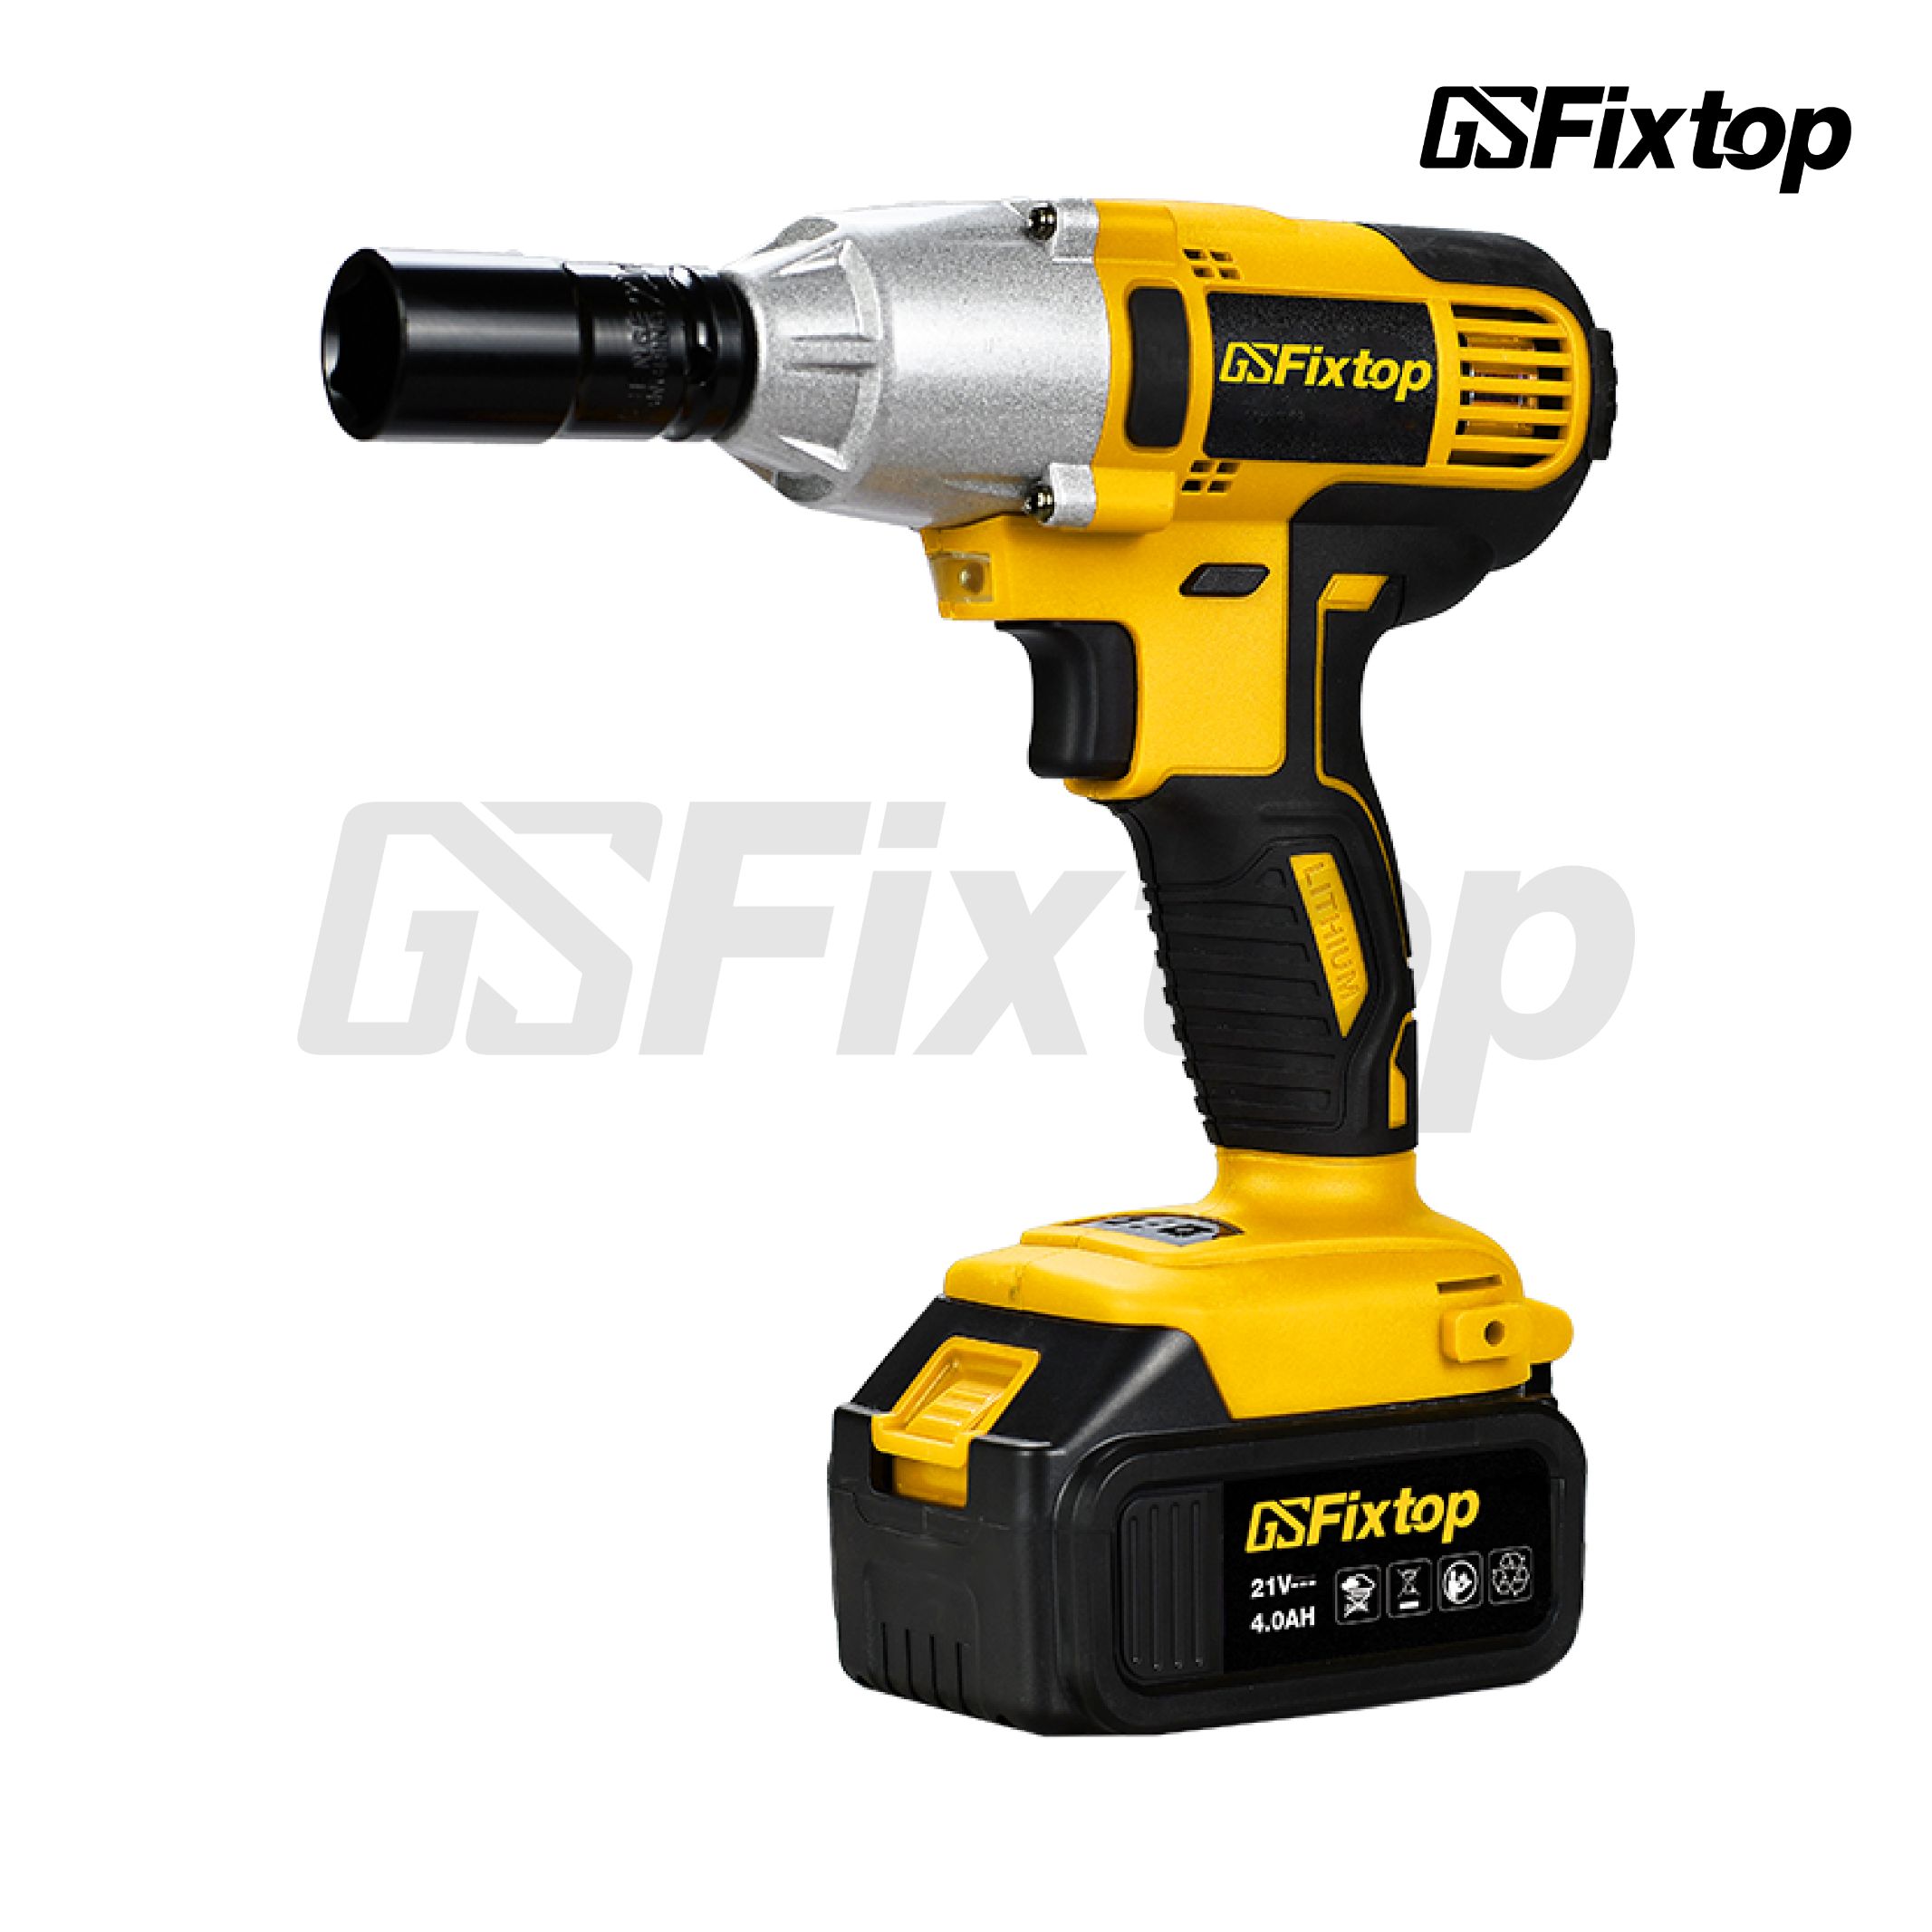 GSFixtop工具Li-ion cordless screwdriver 21V锂电扳手详情图3